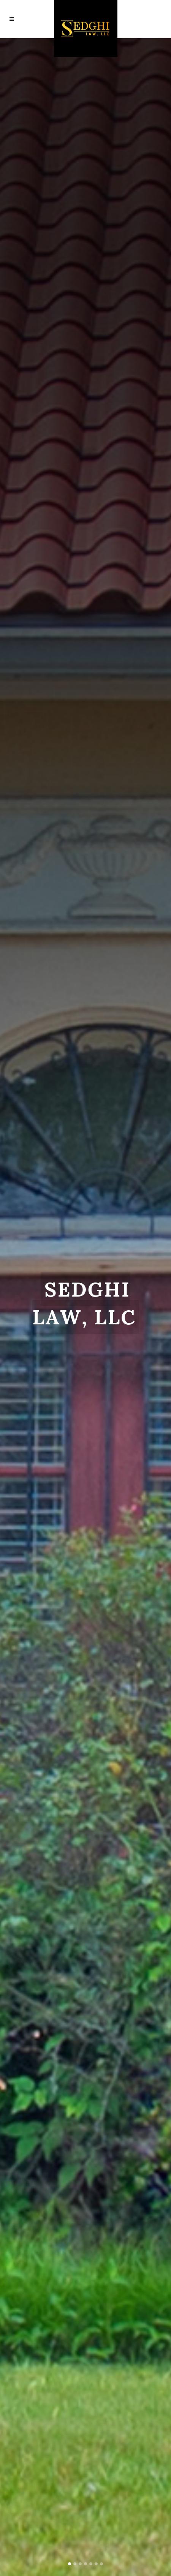 Sedghi, Reza - Macon GA Lawyers